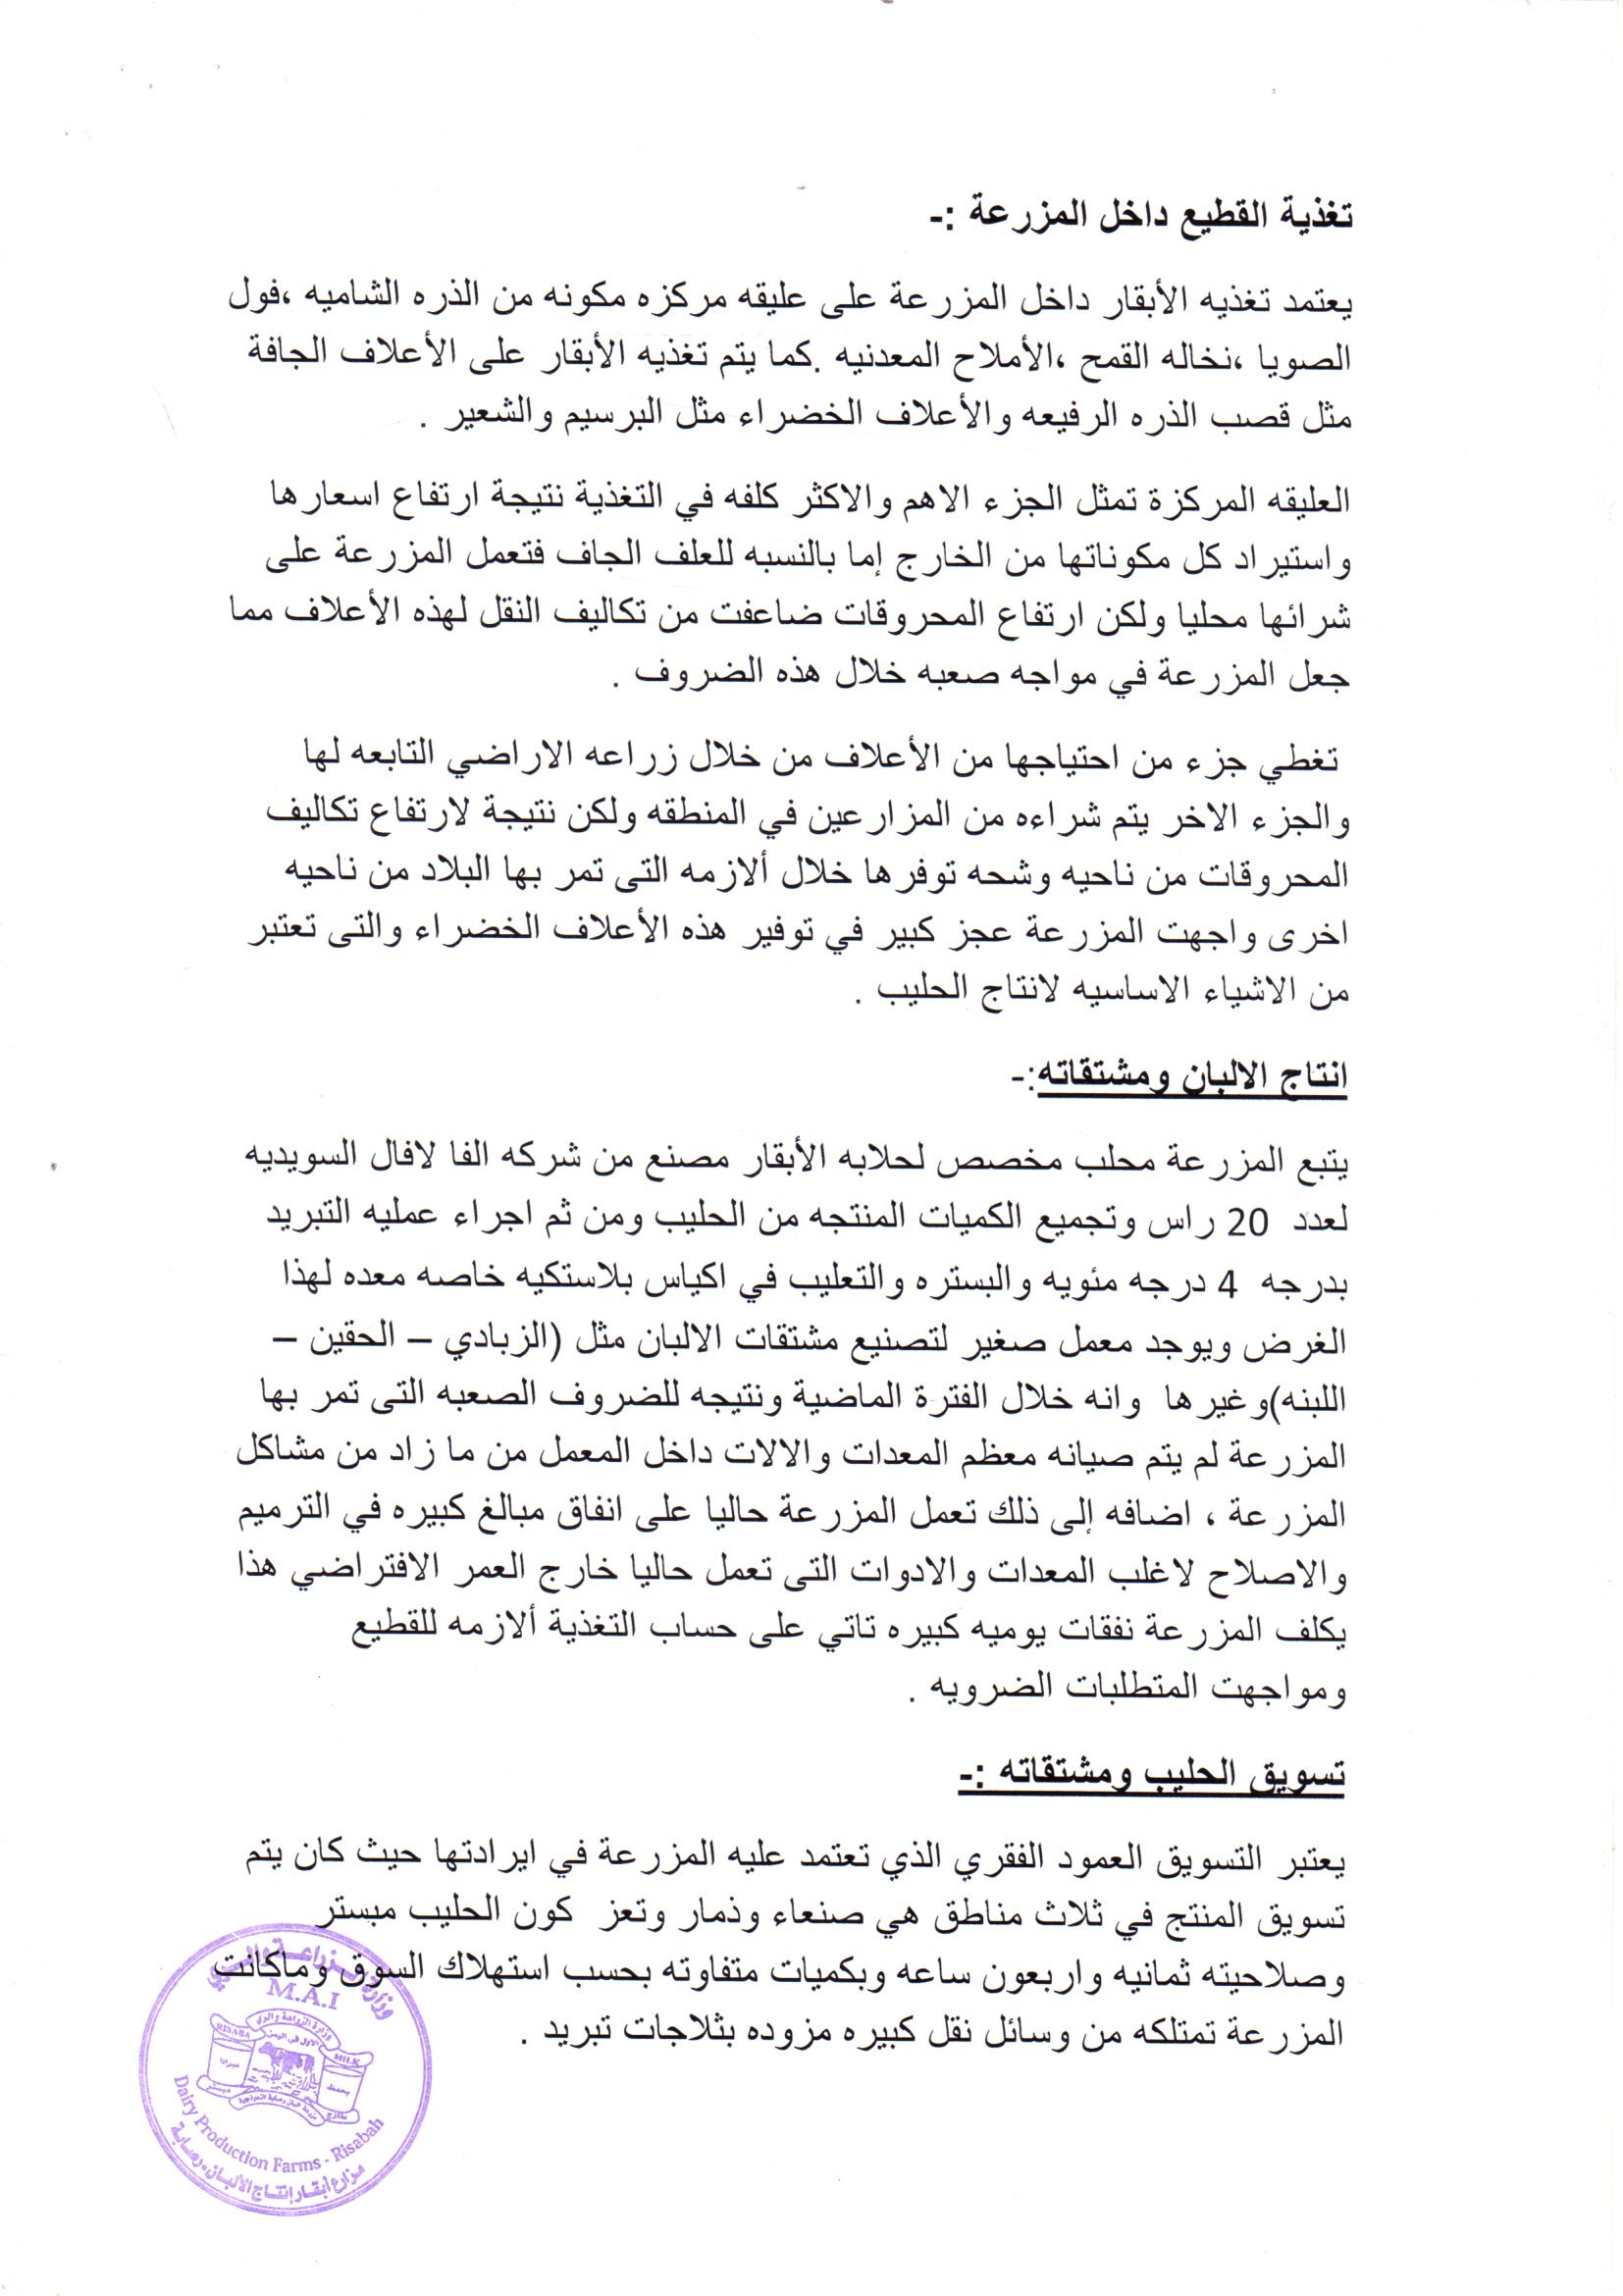 dhamar report page 3 Rosabah farm for OWAP-AR 3 NOV 2018   obtained by Hisham.jpg